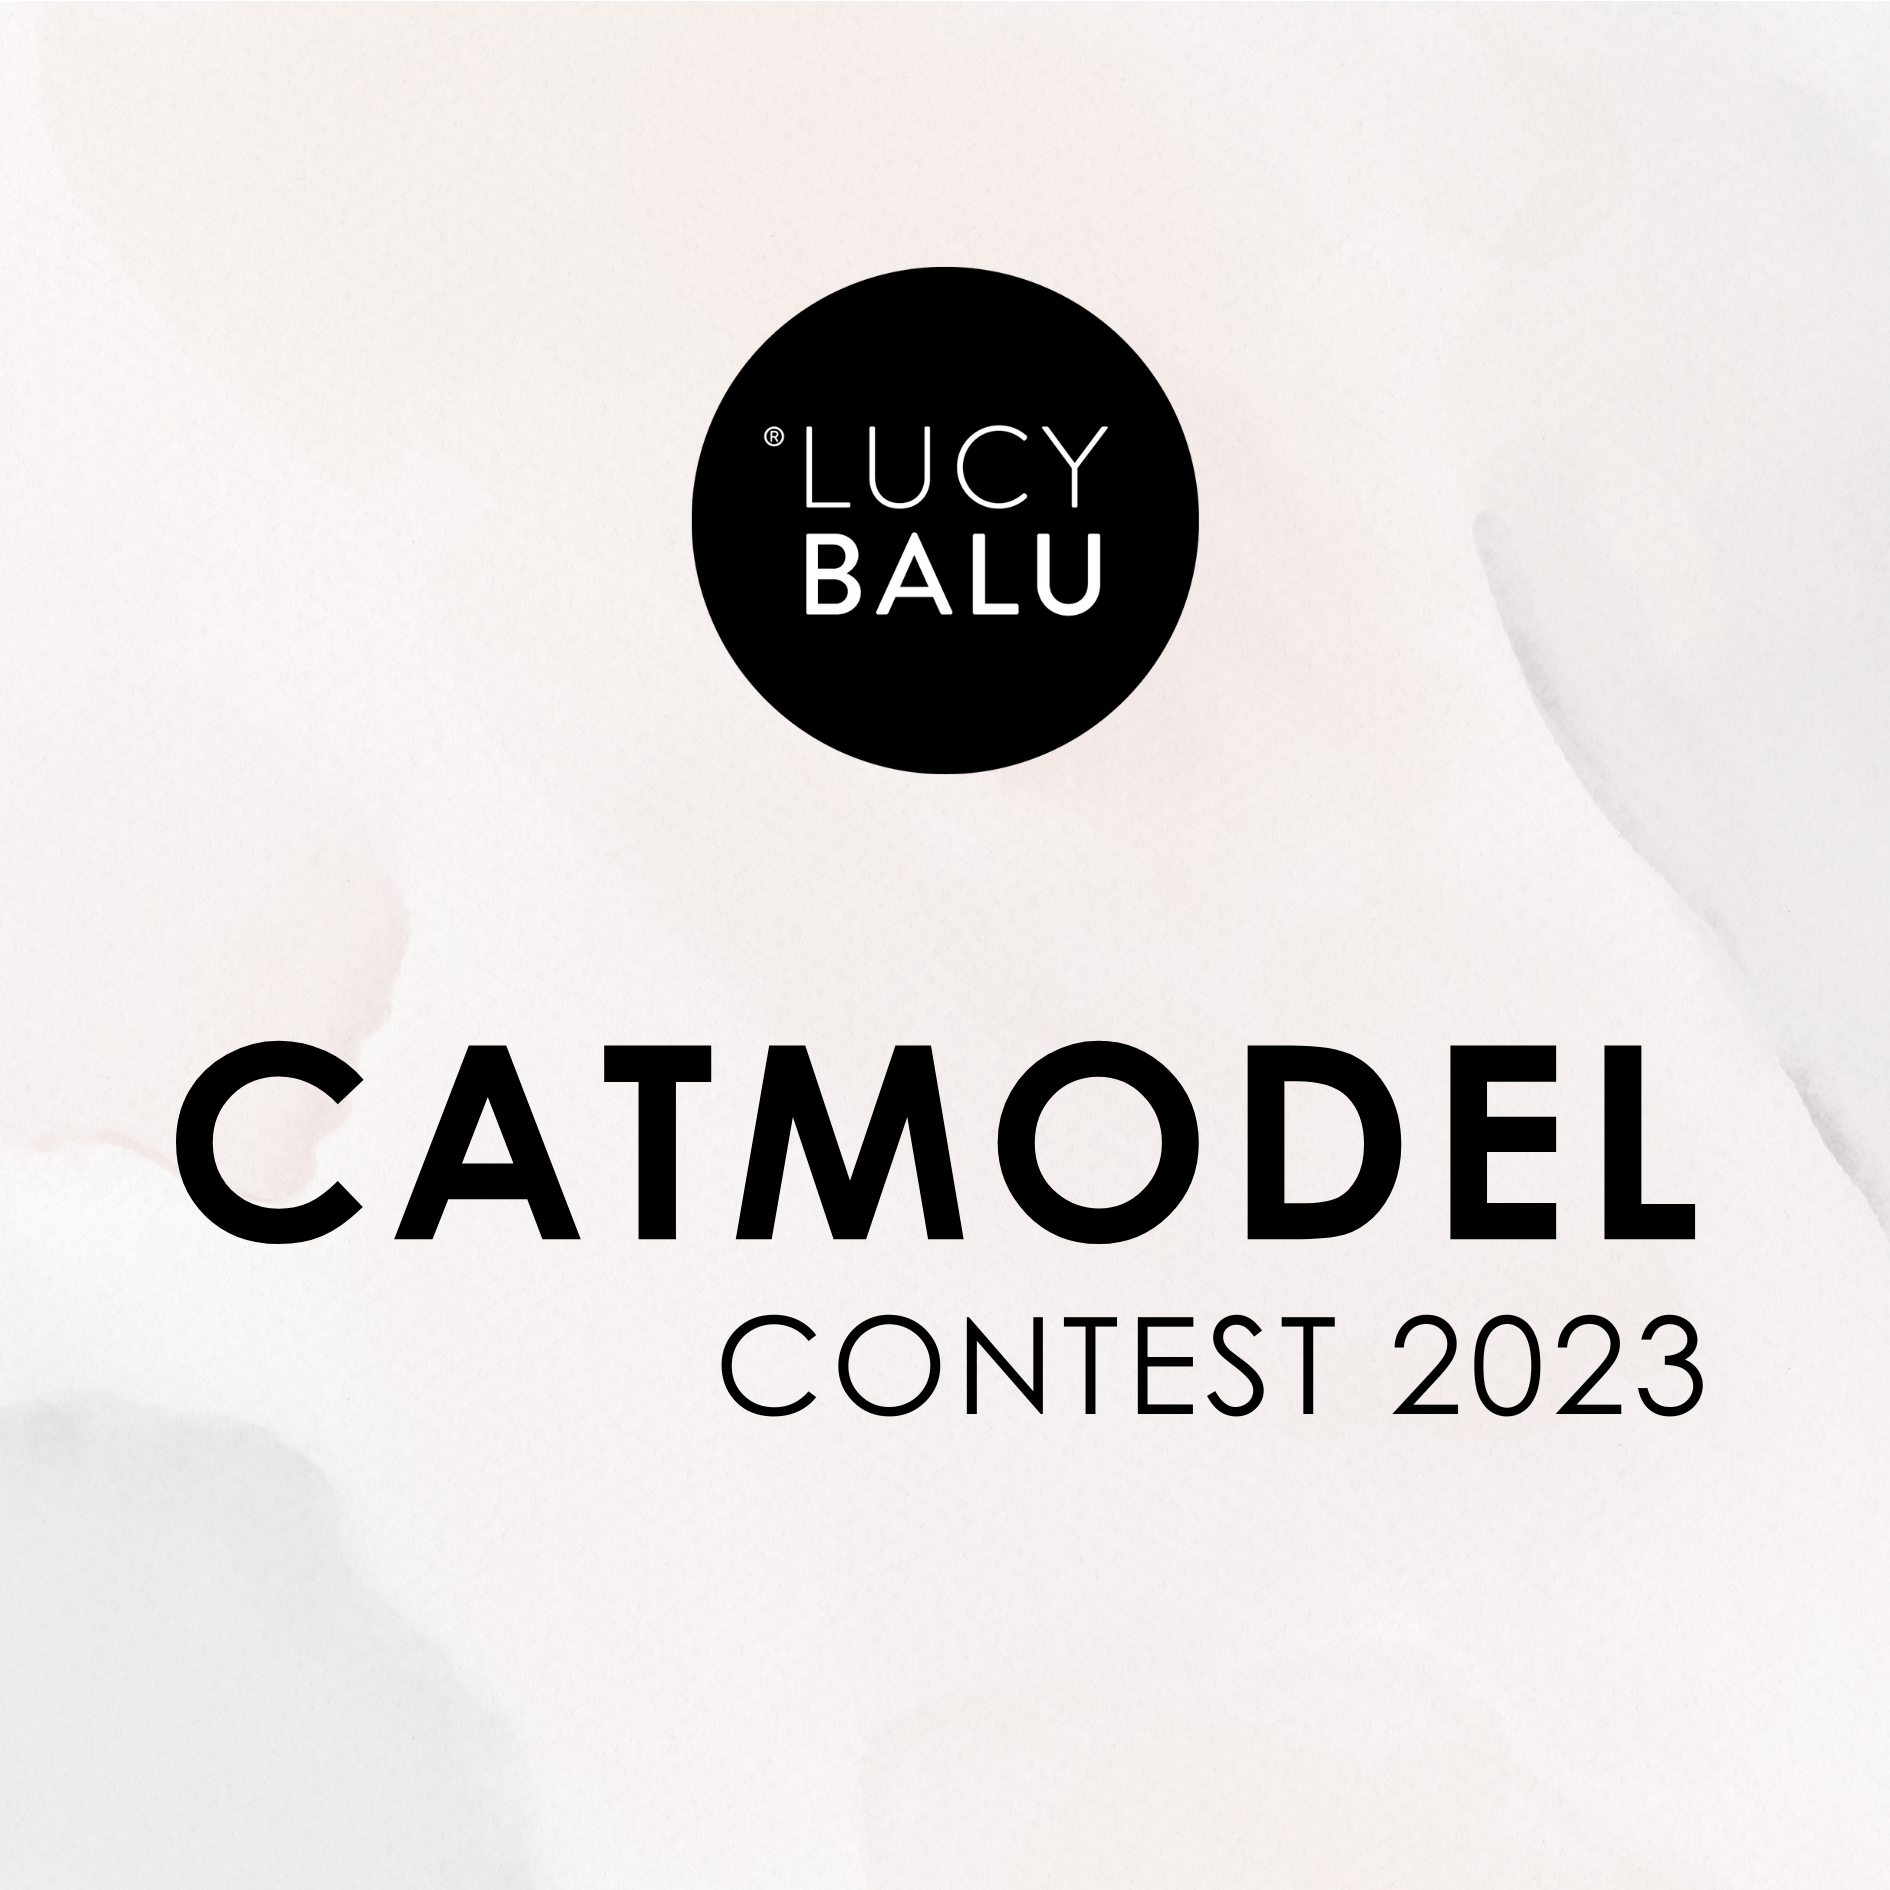 LUCYBALU STARTET DEN CATMODEL CONTEST 2023